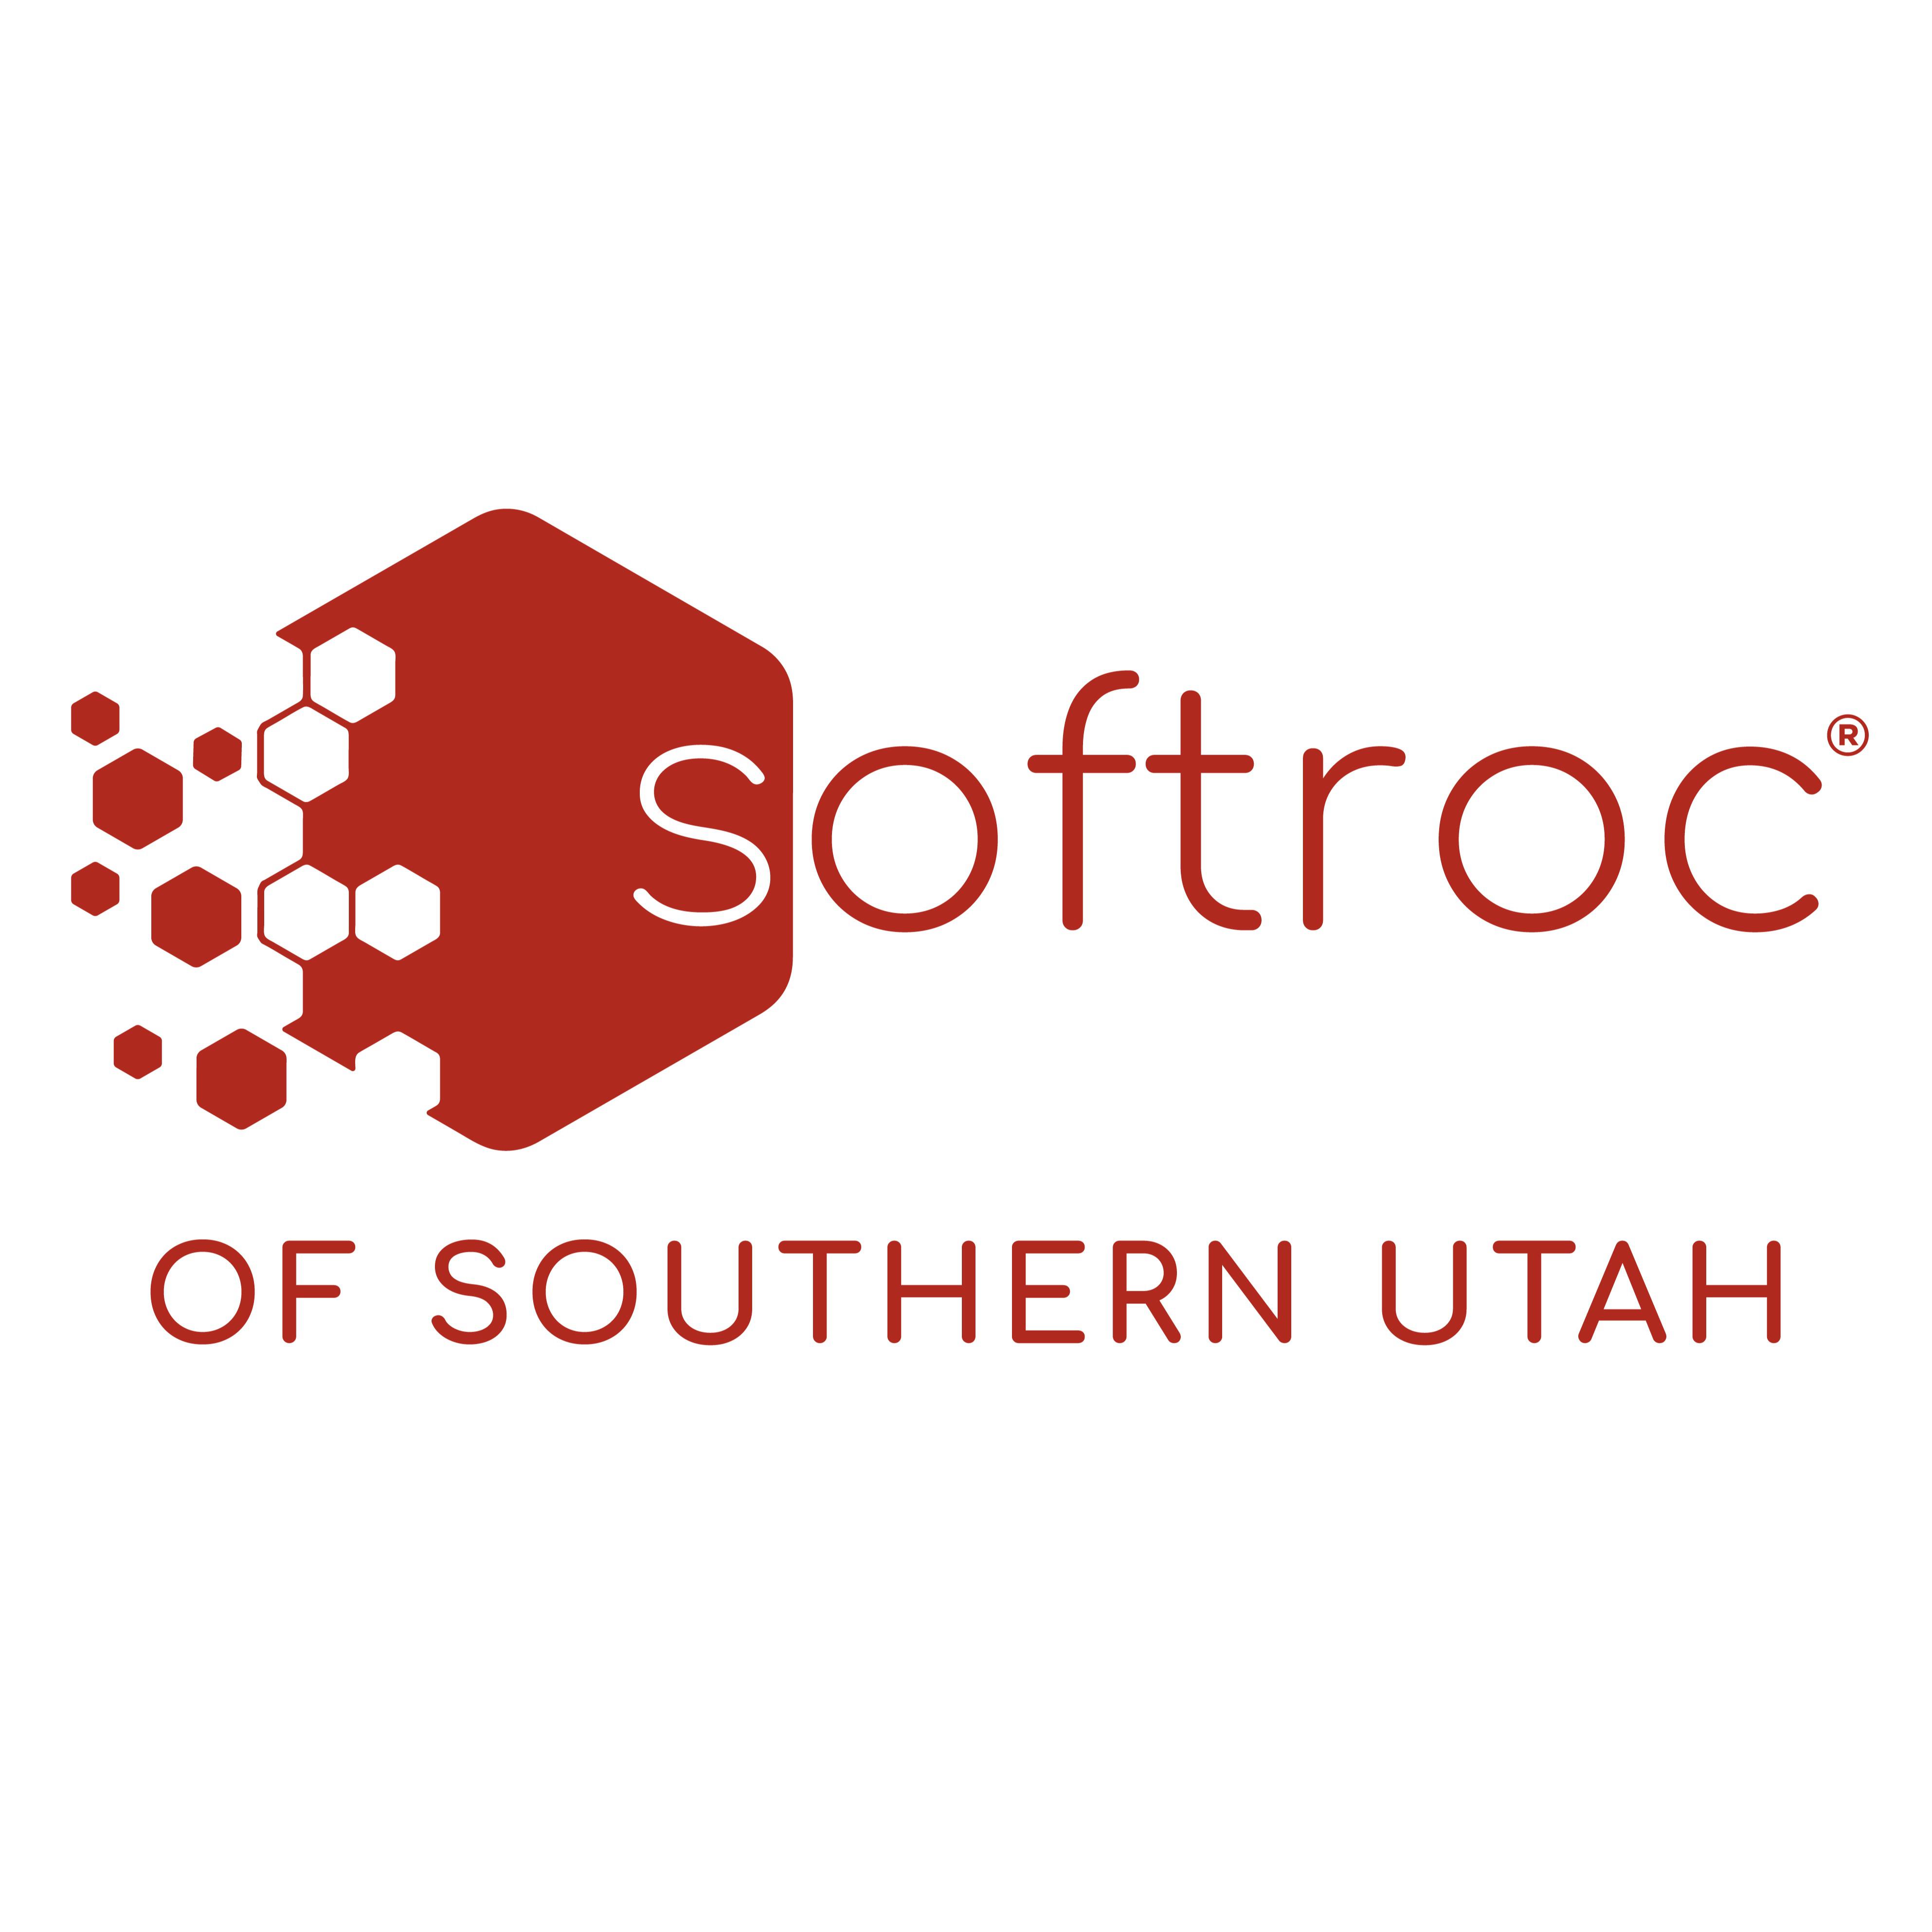 Softroc of Southern Utah